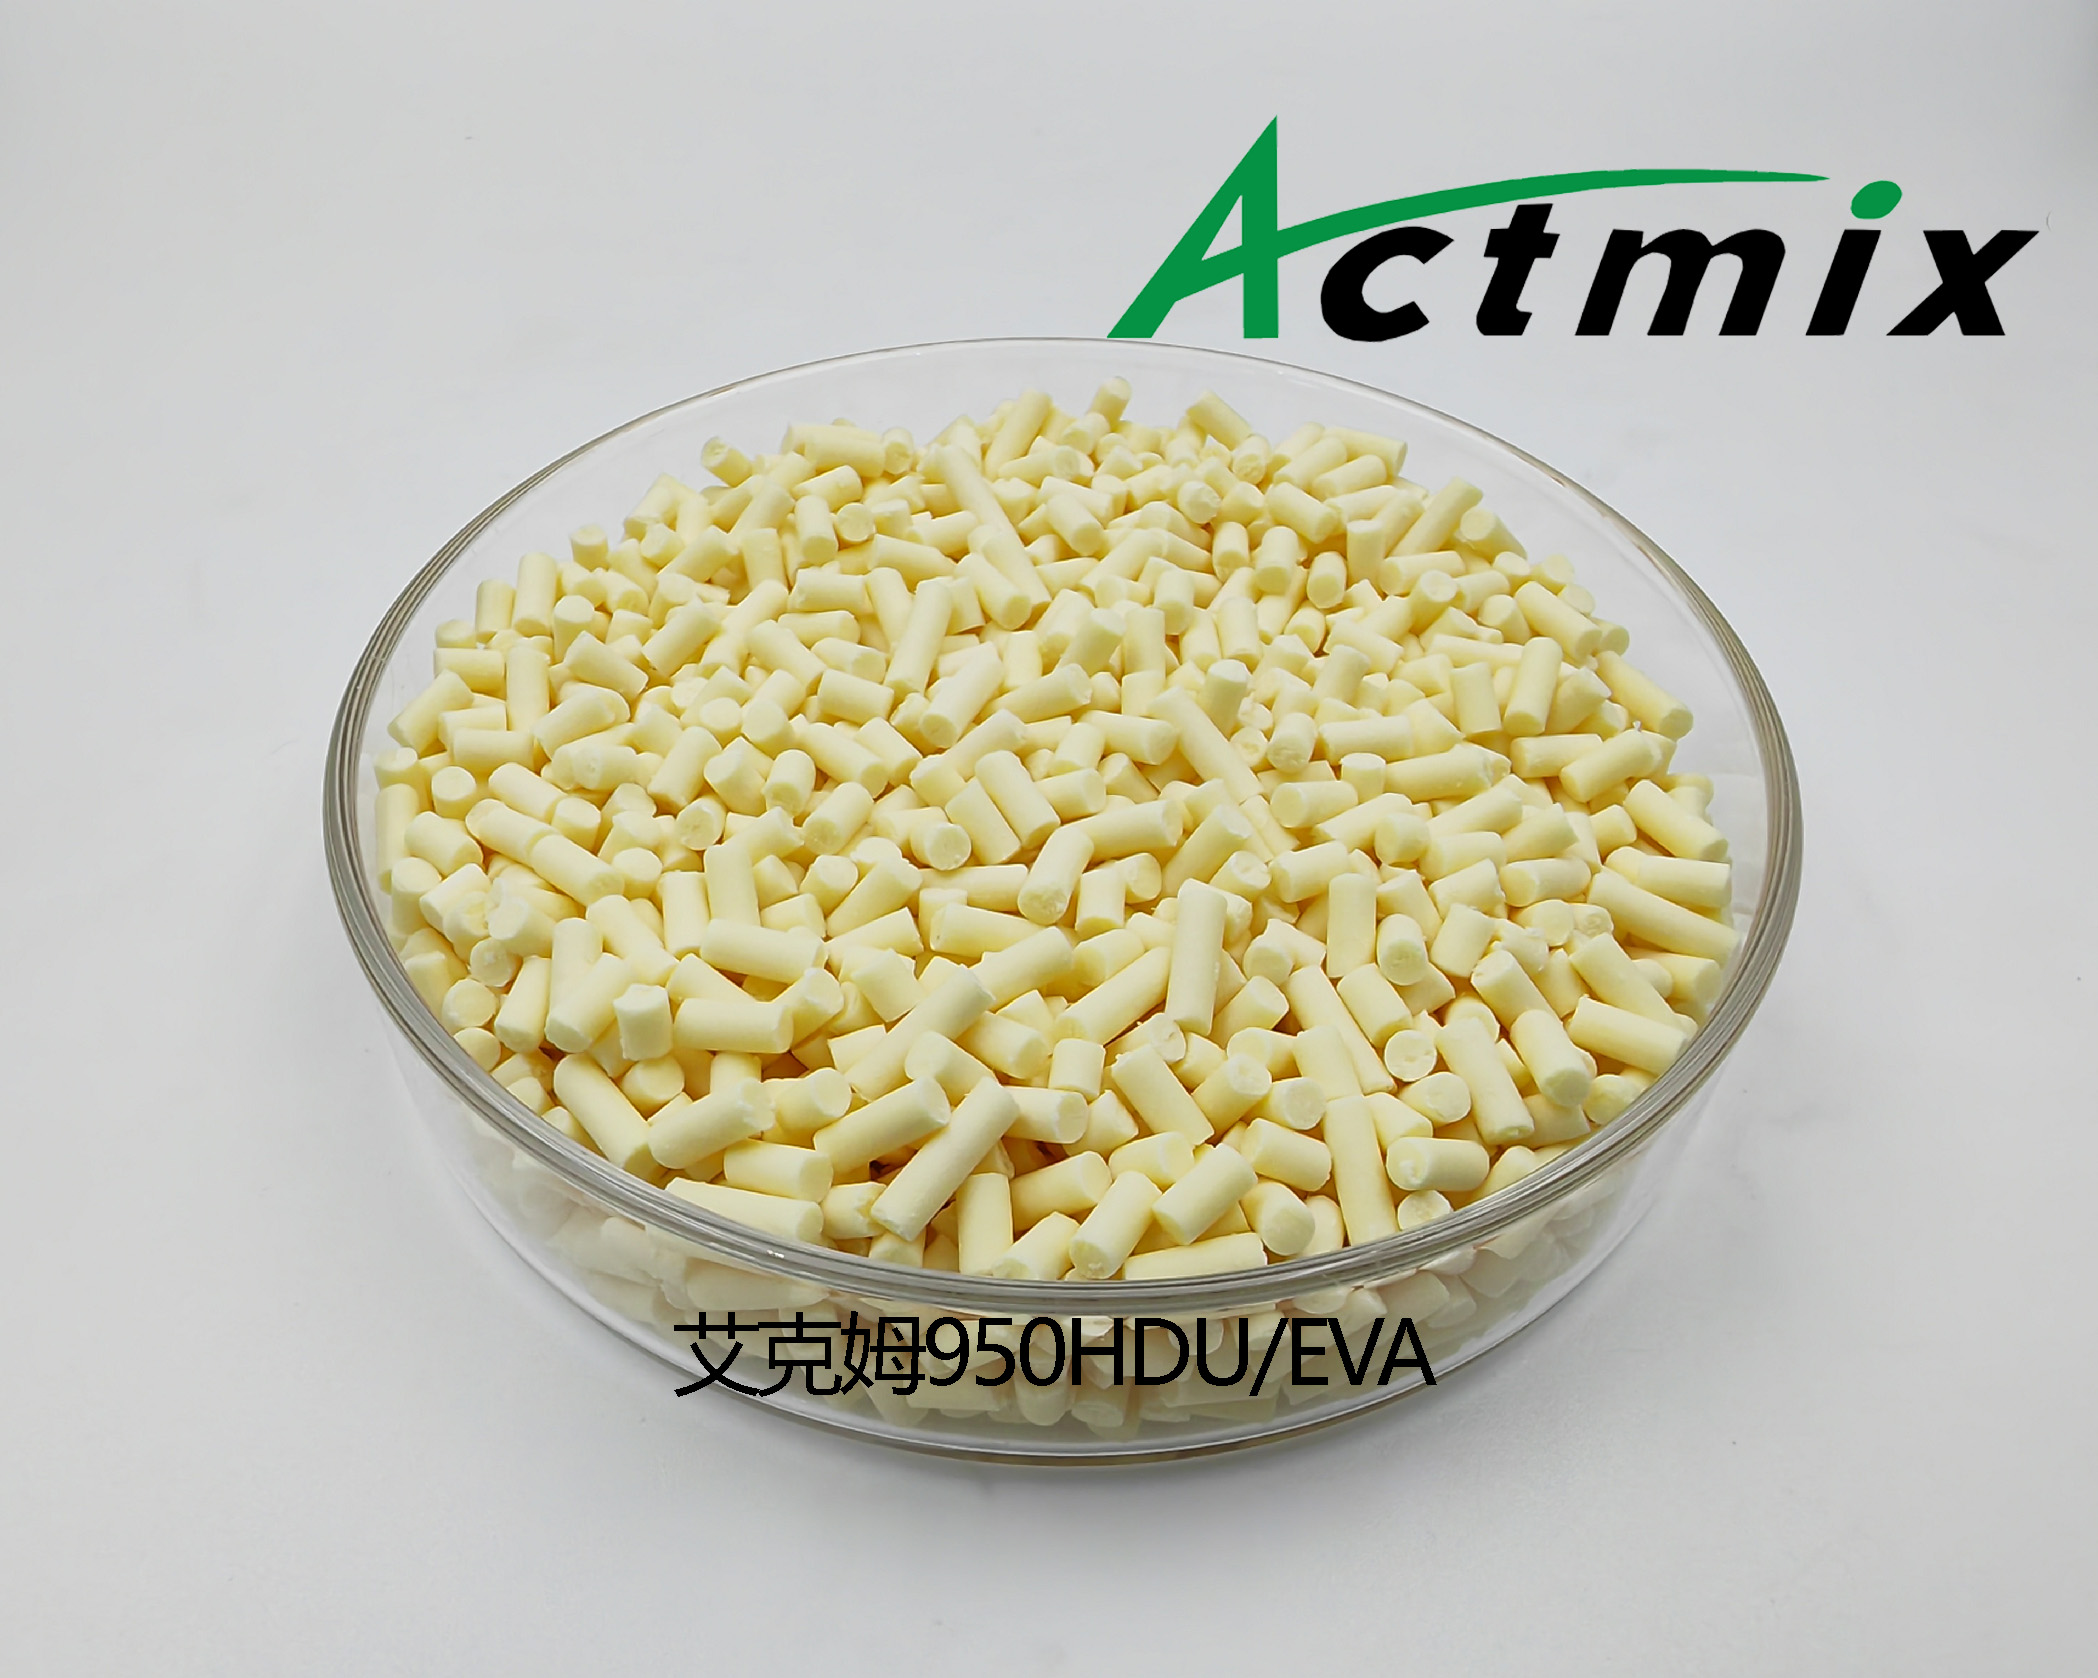 Actmix 950HDU/EVA